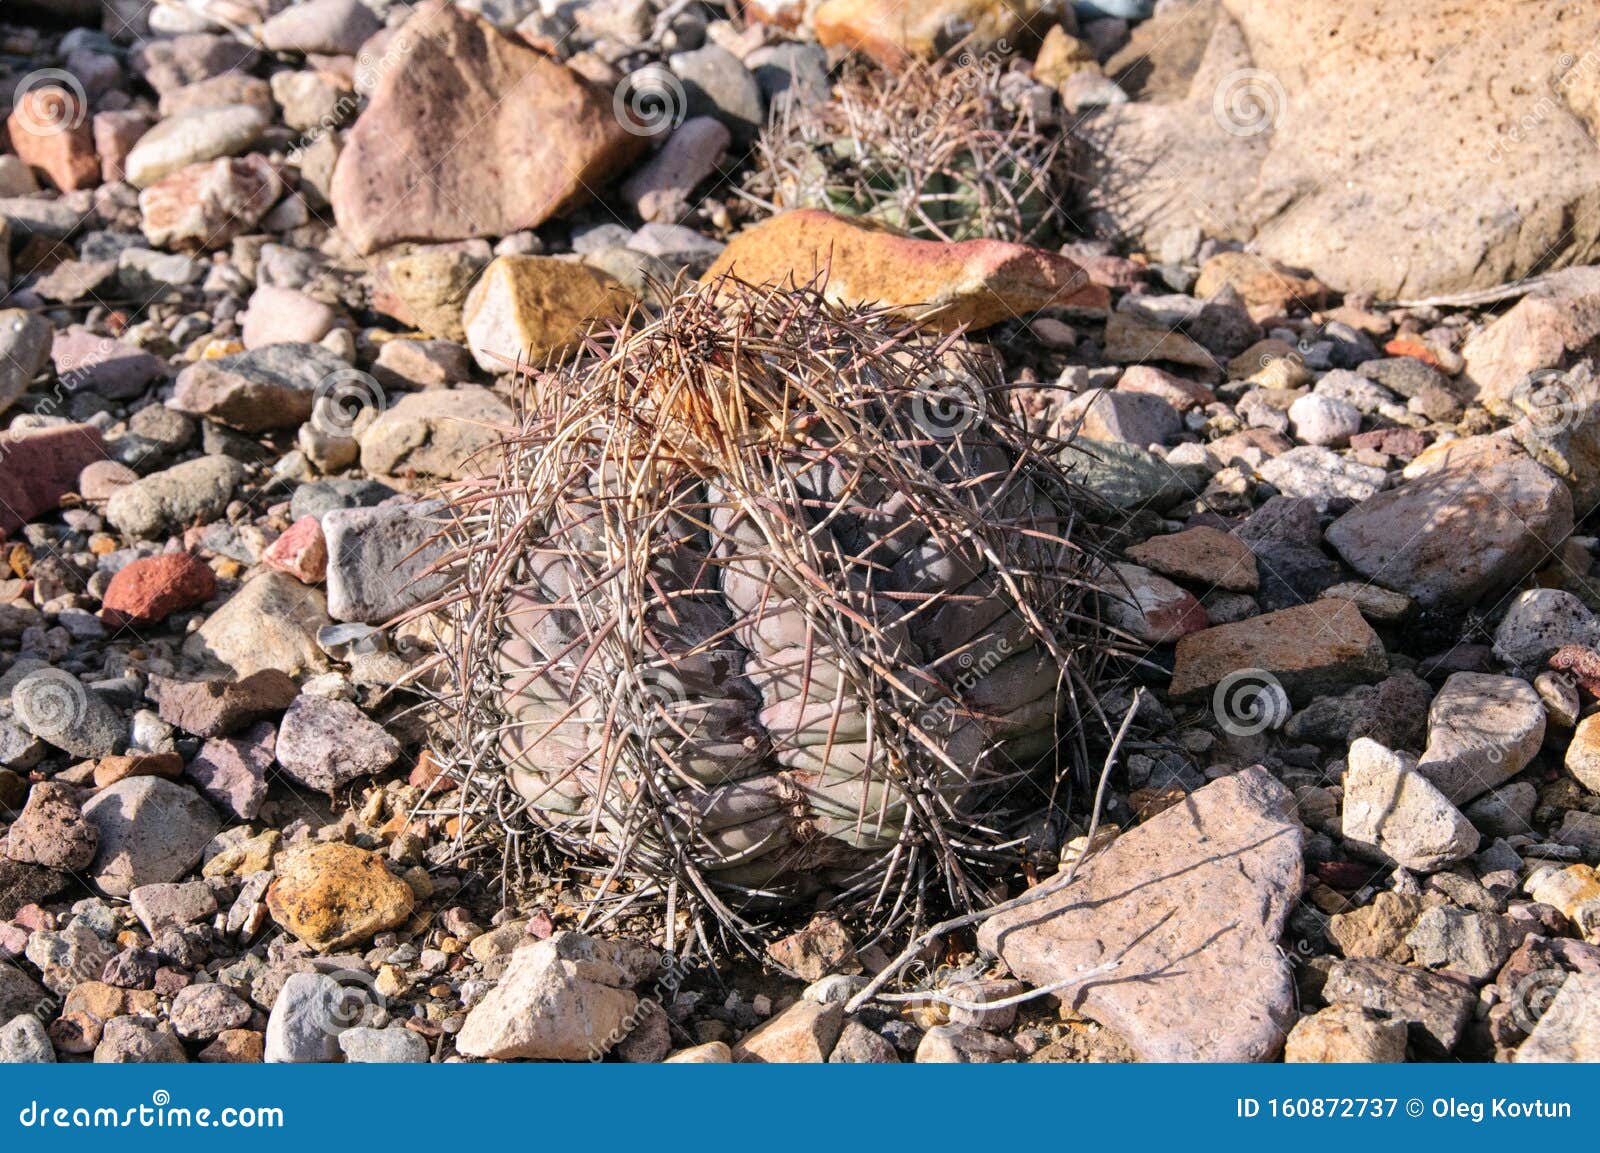 eagle claws or turk`s head cactus, echinocactus horizonthalonius  in the texas desert